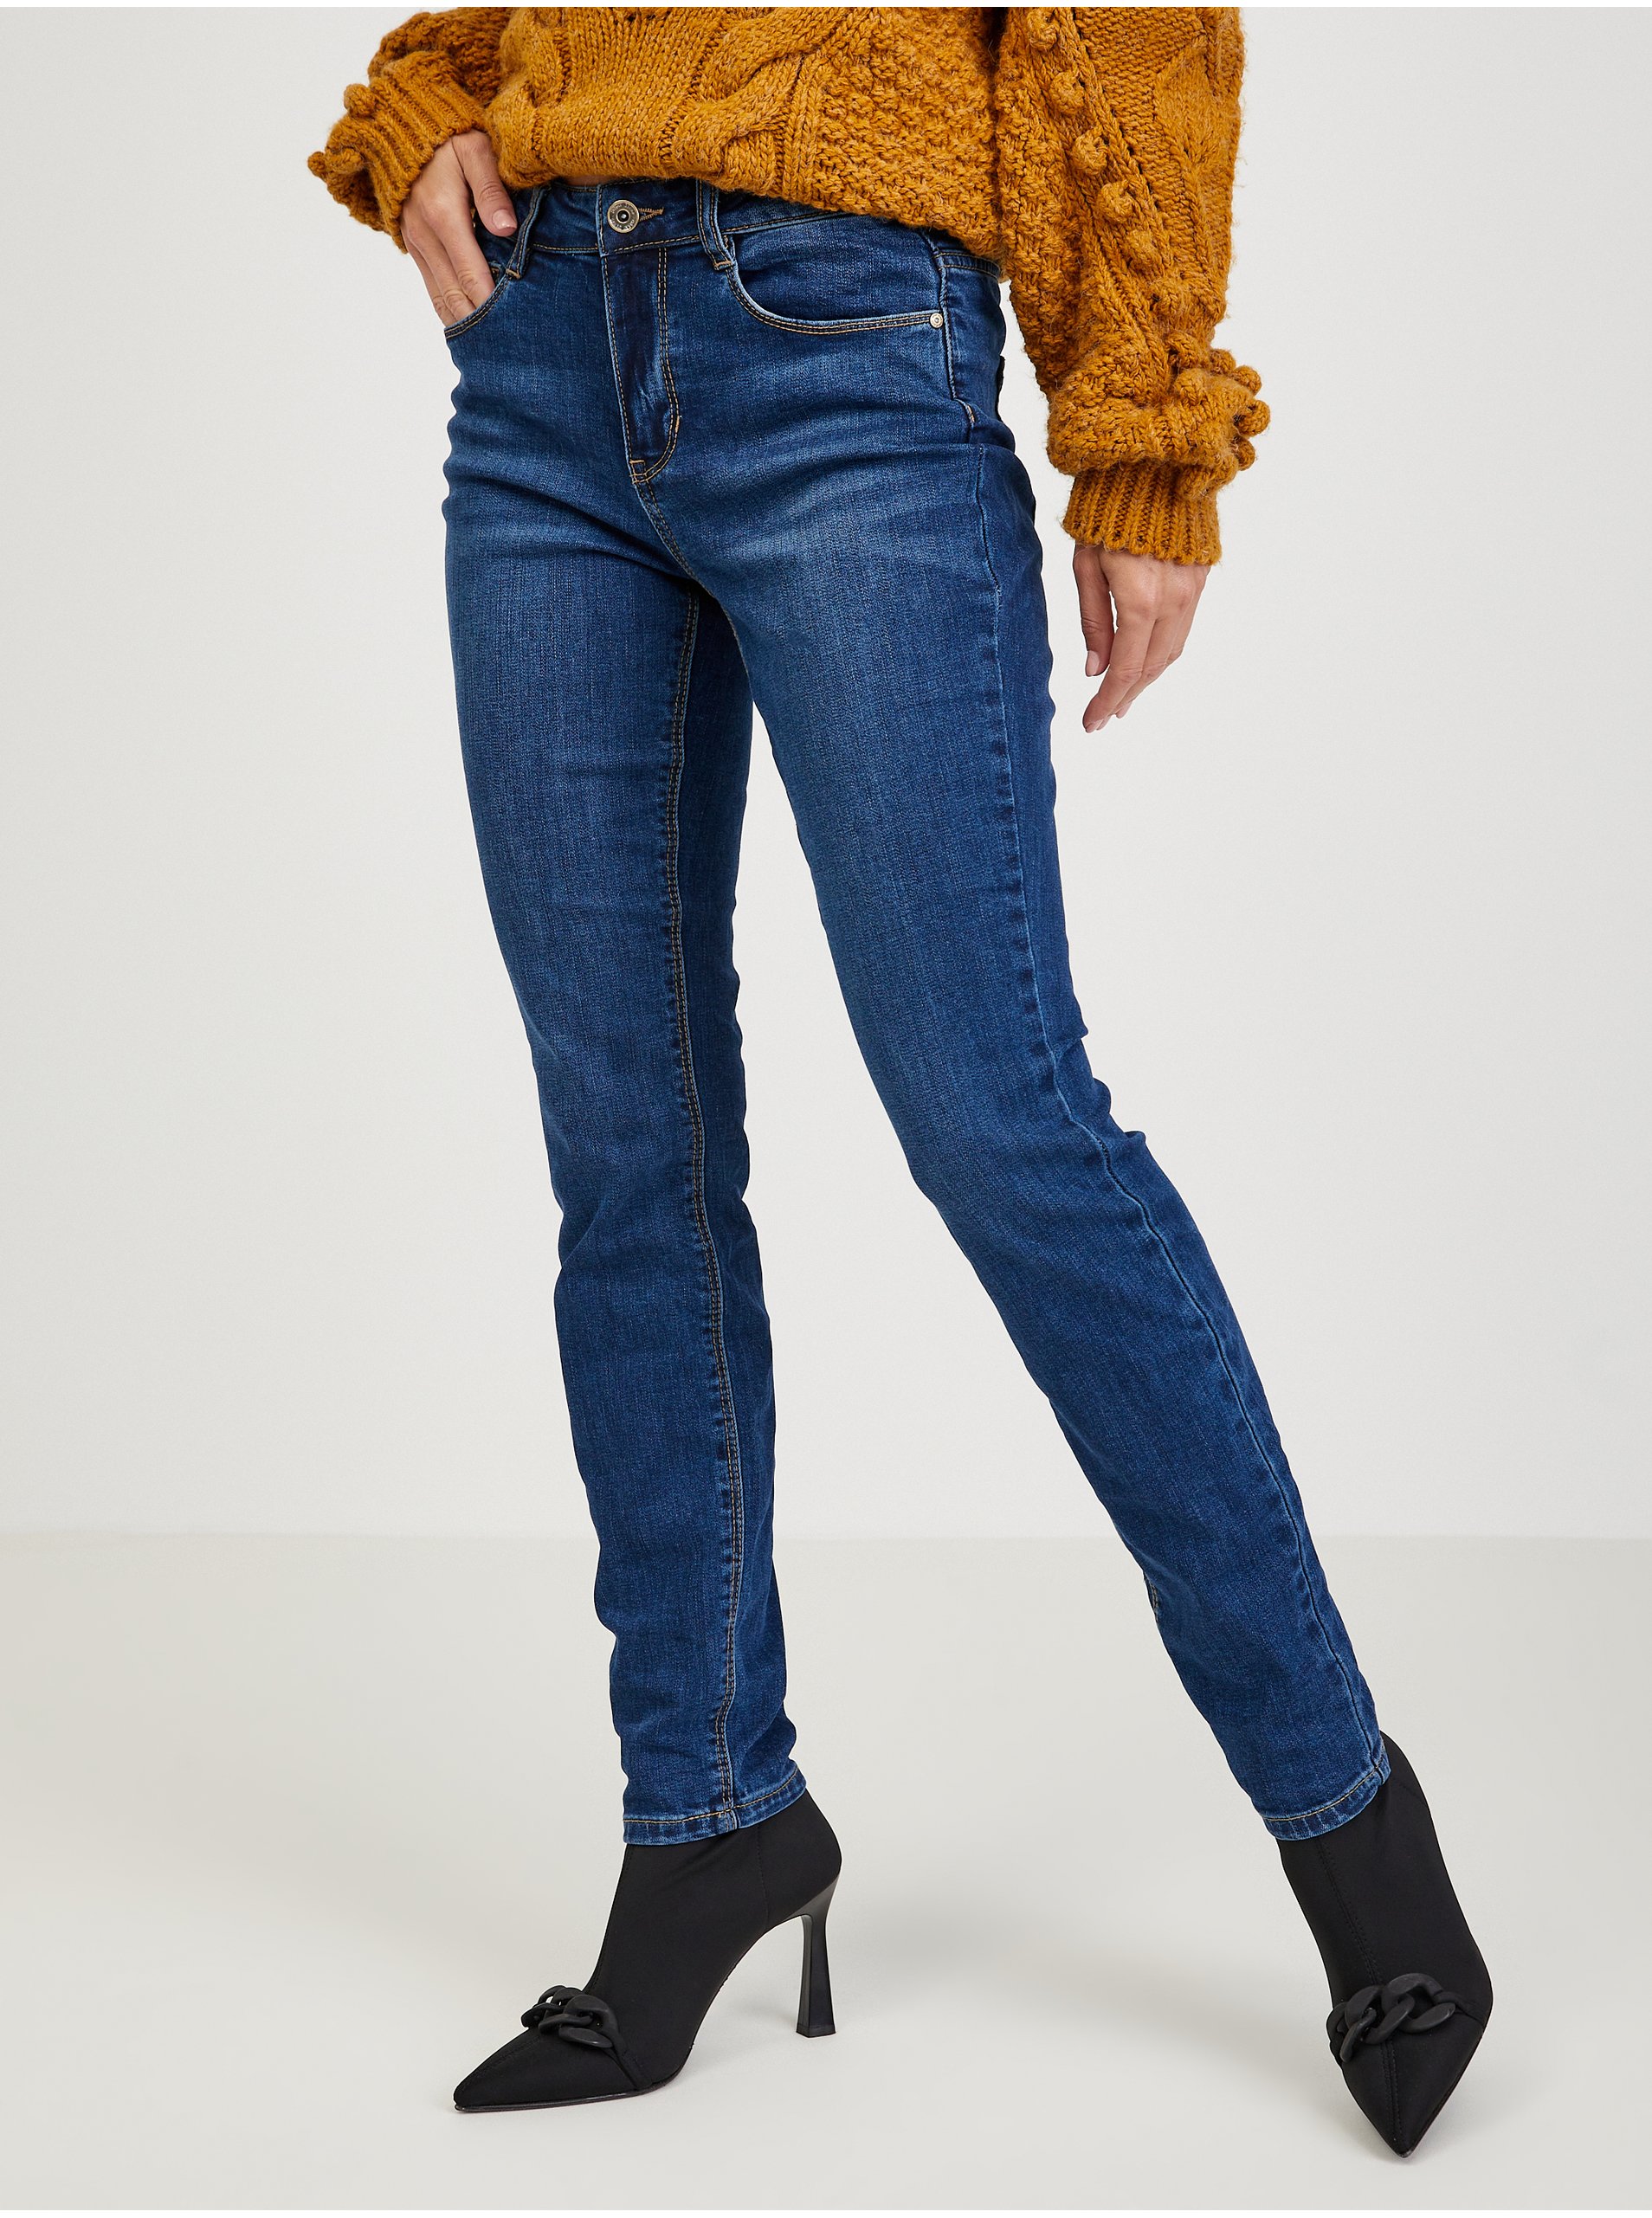 Granatowe jeansy damskie slim fit ORSAY - Kobieta